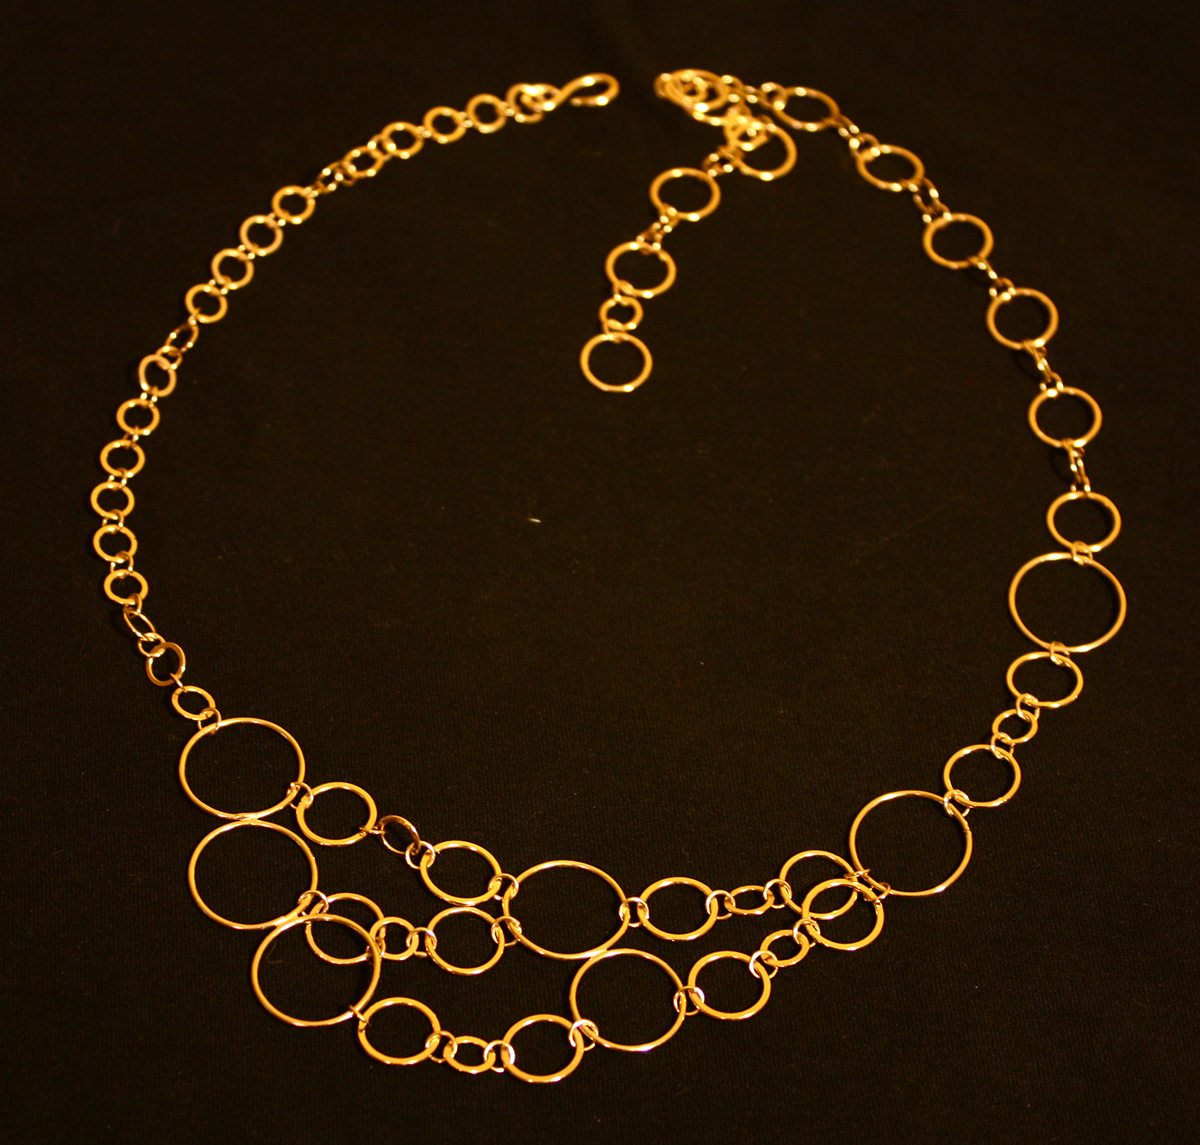 metal jewelry geometry ring Necklace earrings risd